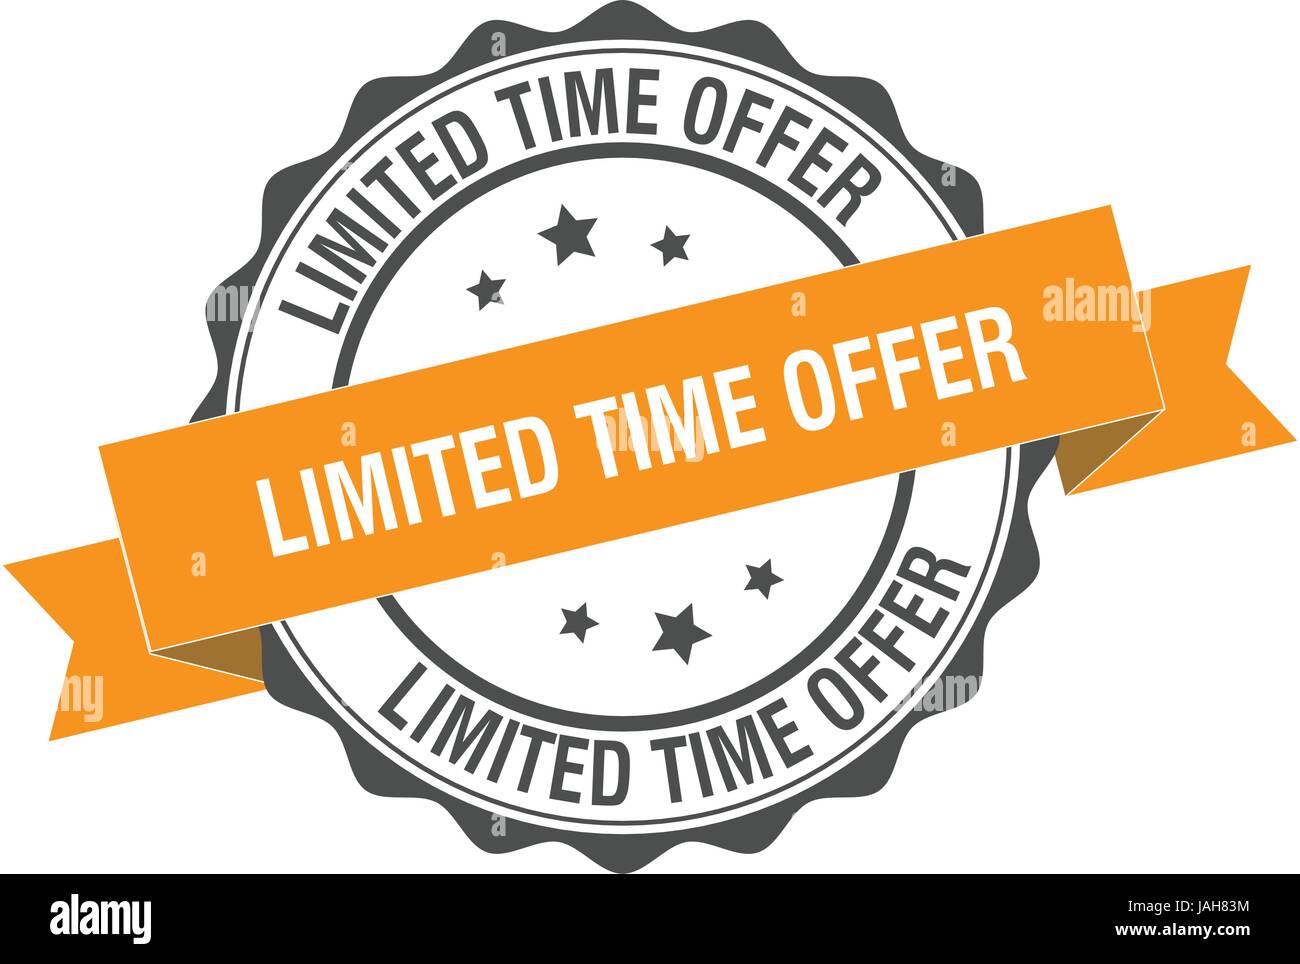 Limited time offer stamp illustration Stock Vector